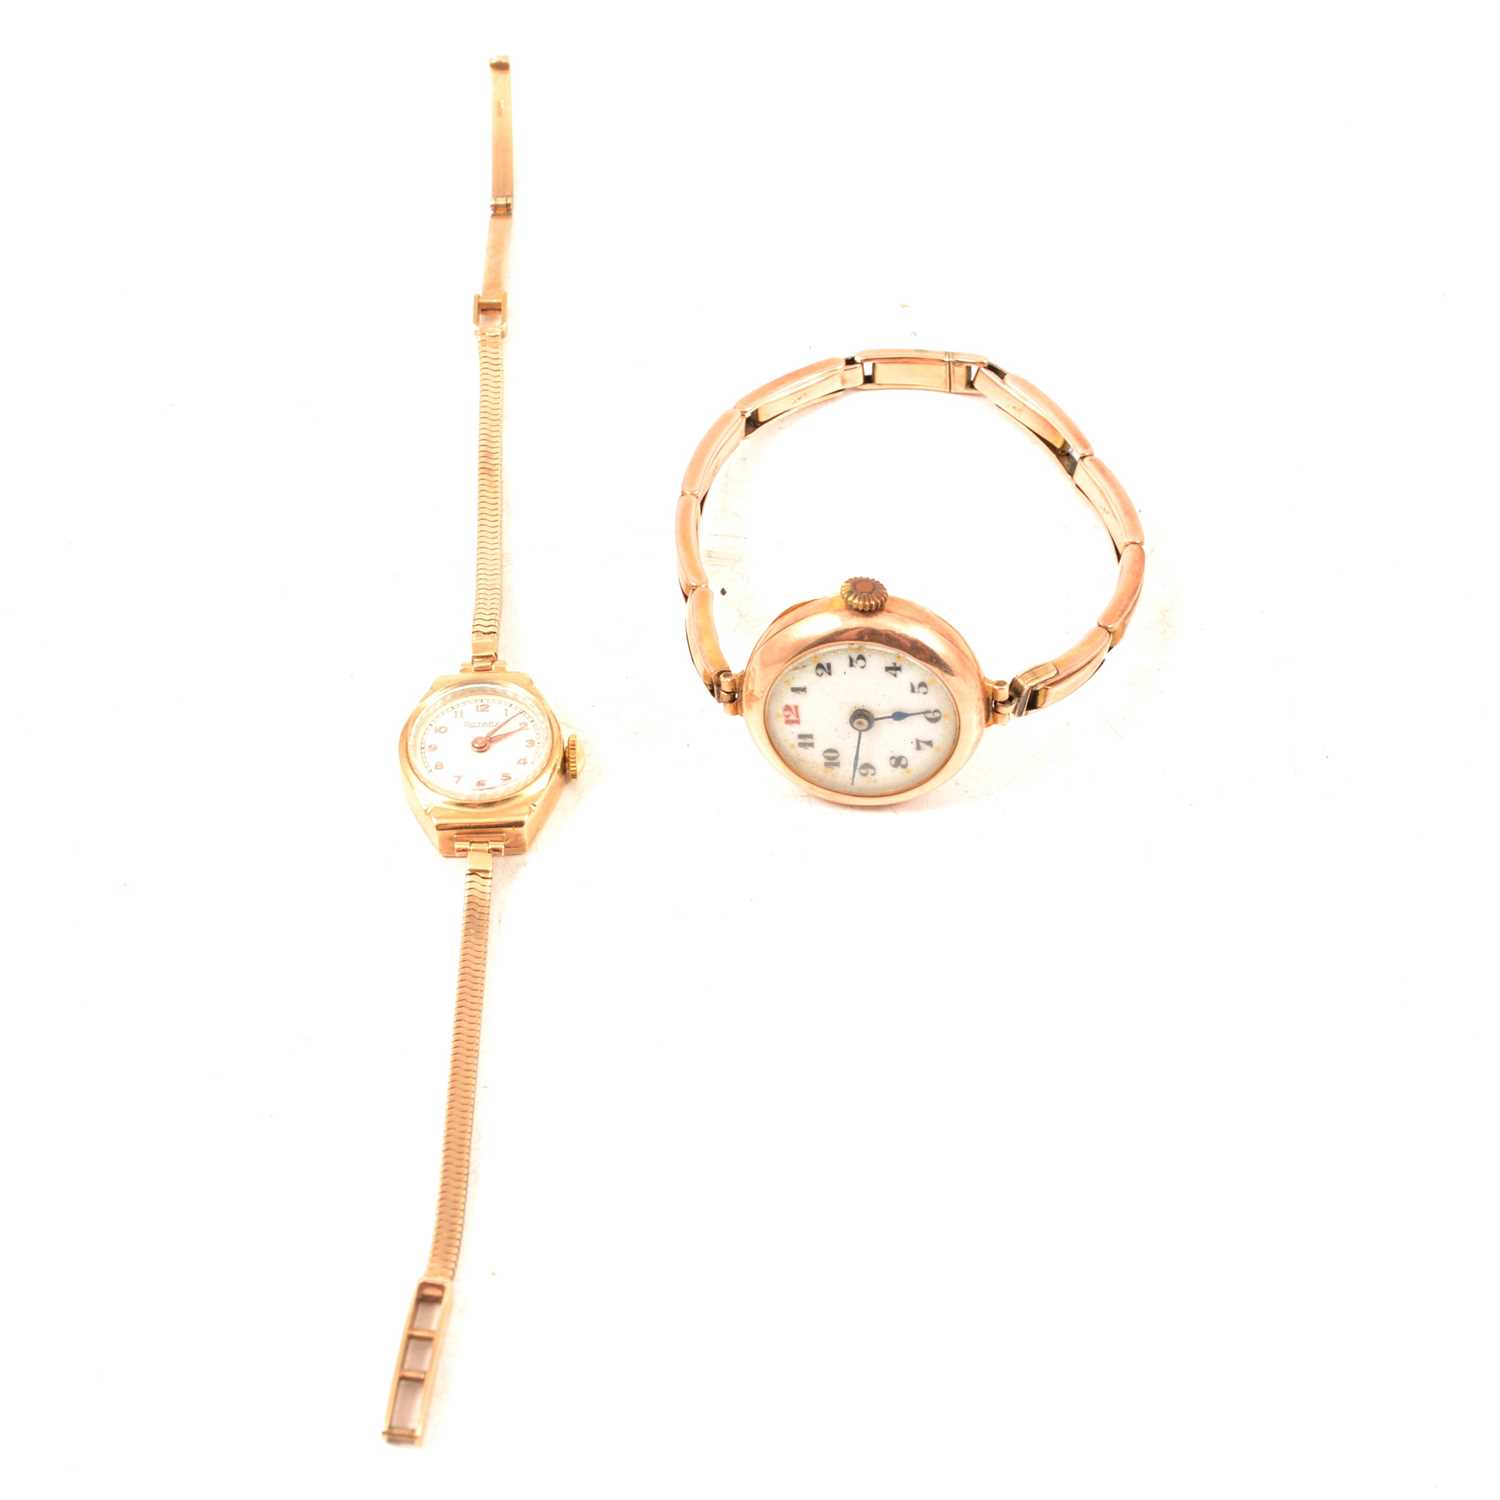 Two 9 carat gold vintage ladies' wristwatches.